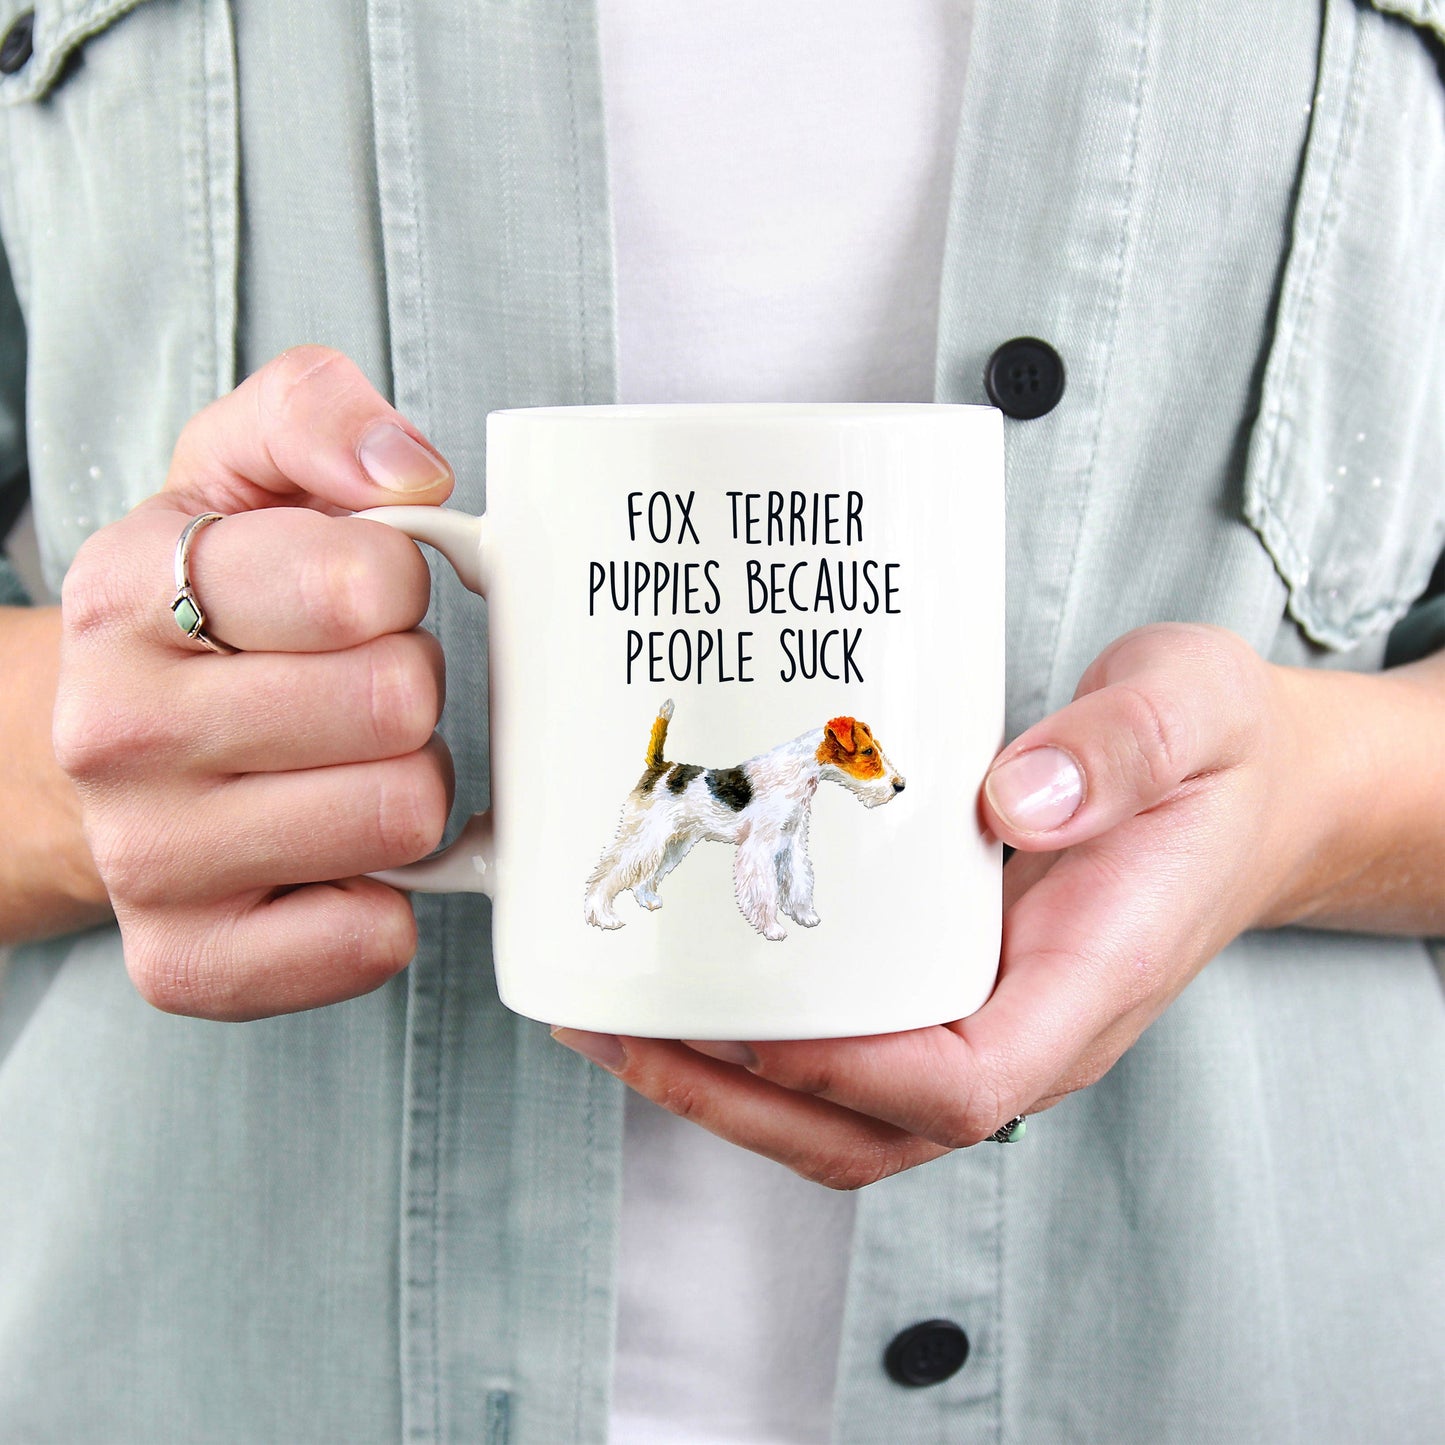 Fox Terrier Puppies Because People Suck Funny Ceramic Coffee Mug